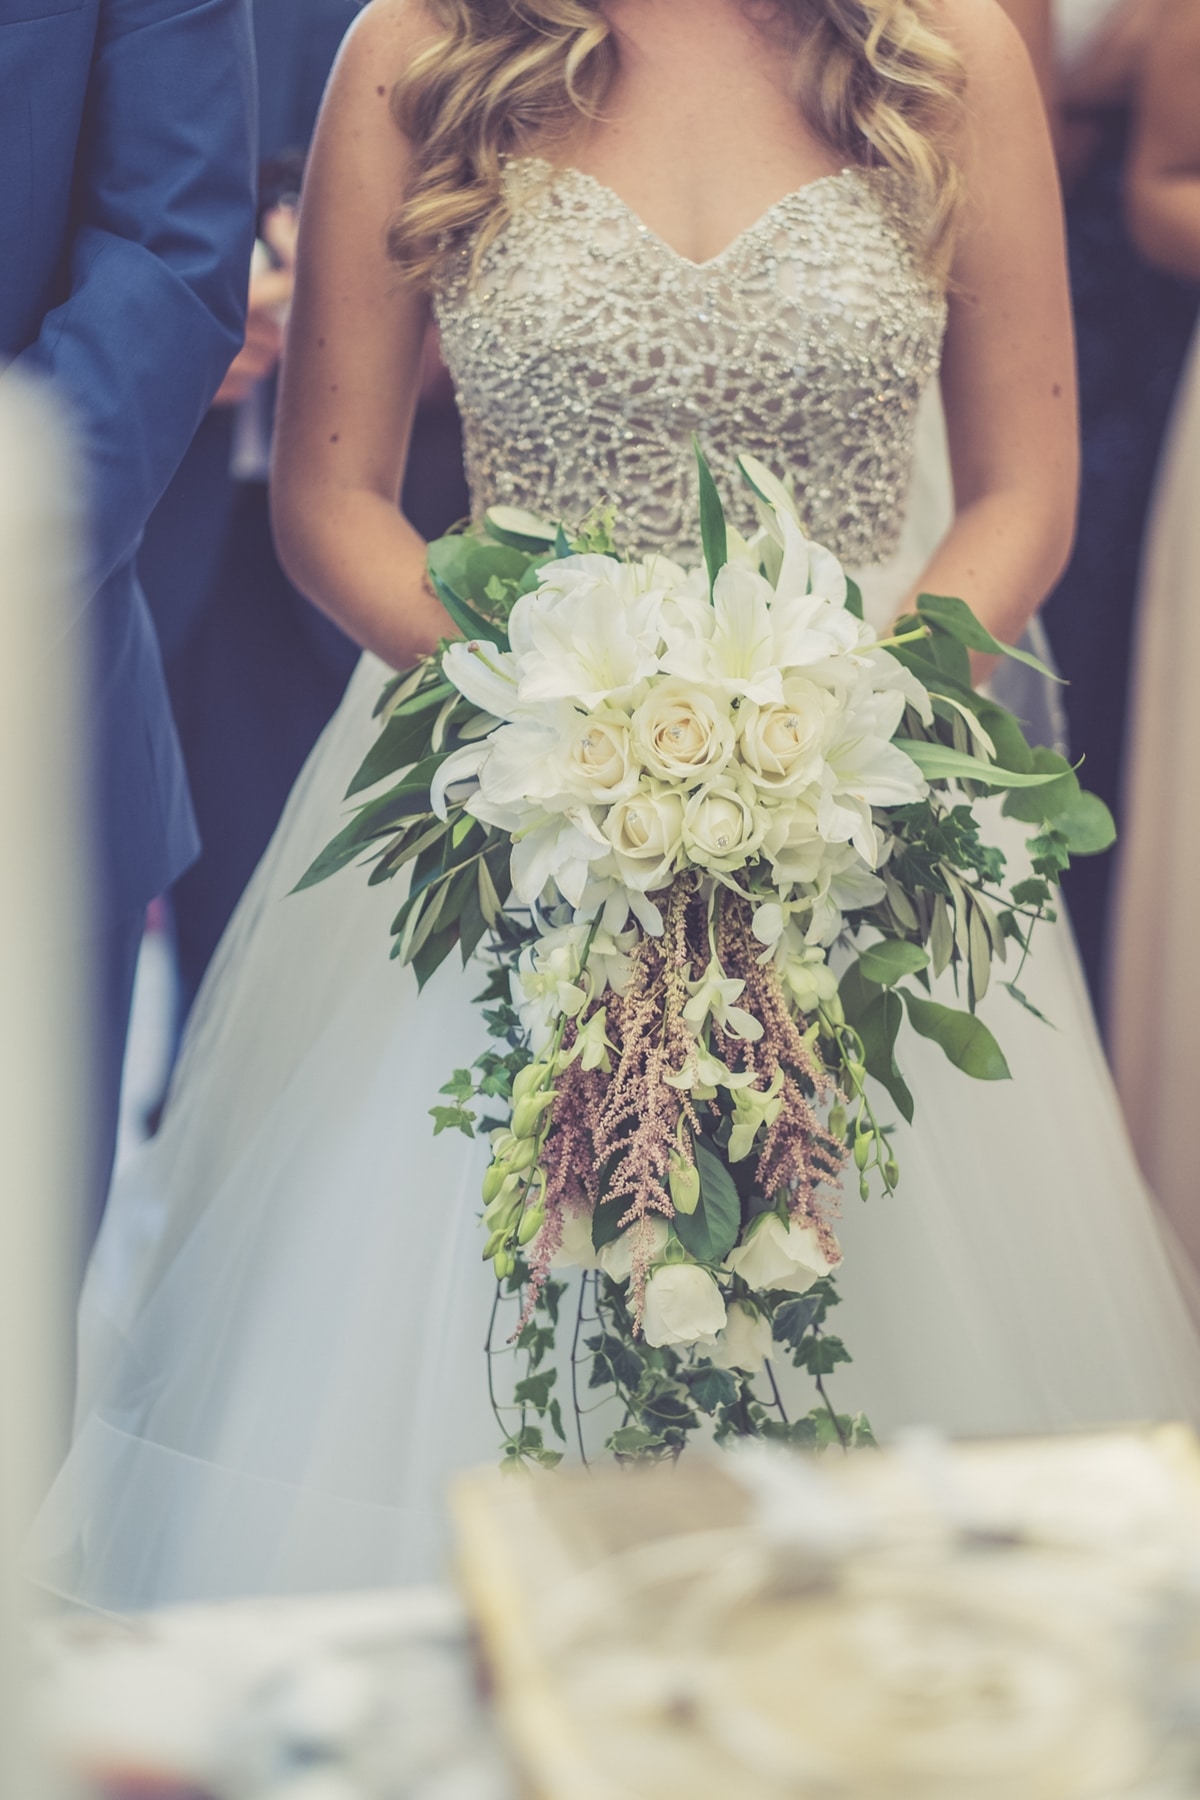 Stunning bridal bouquet